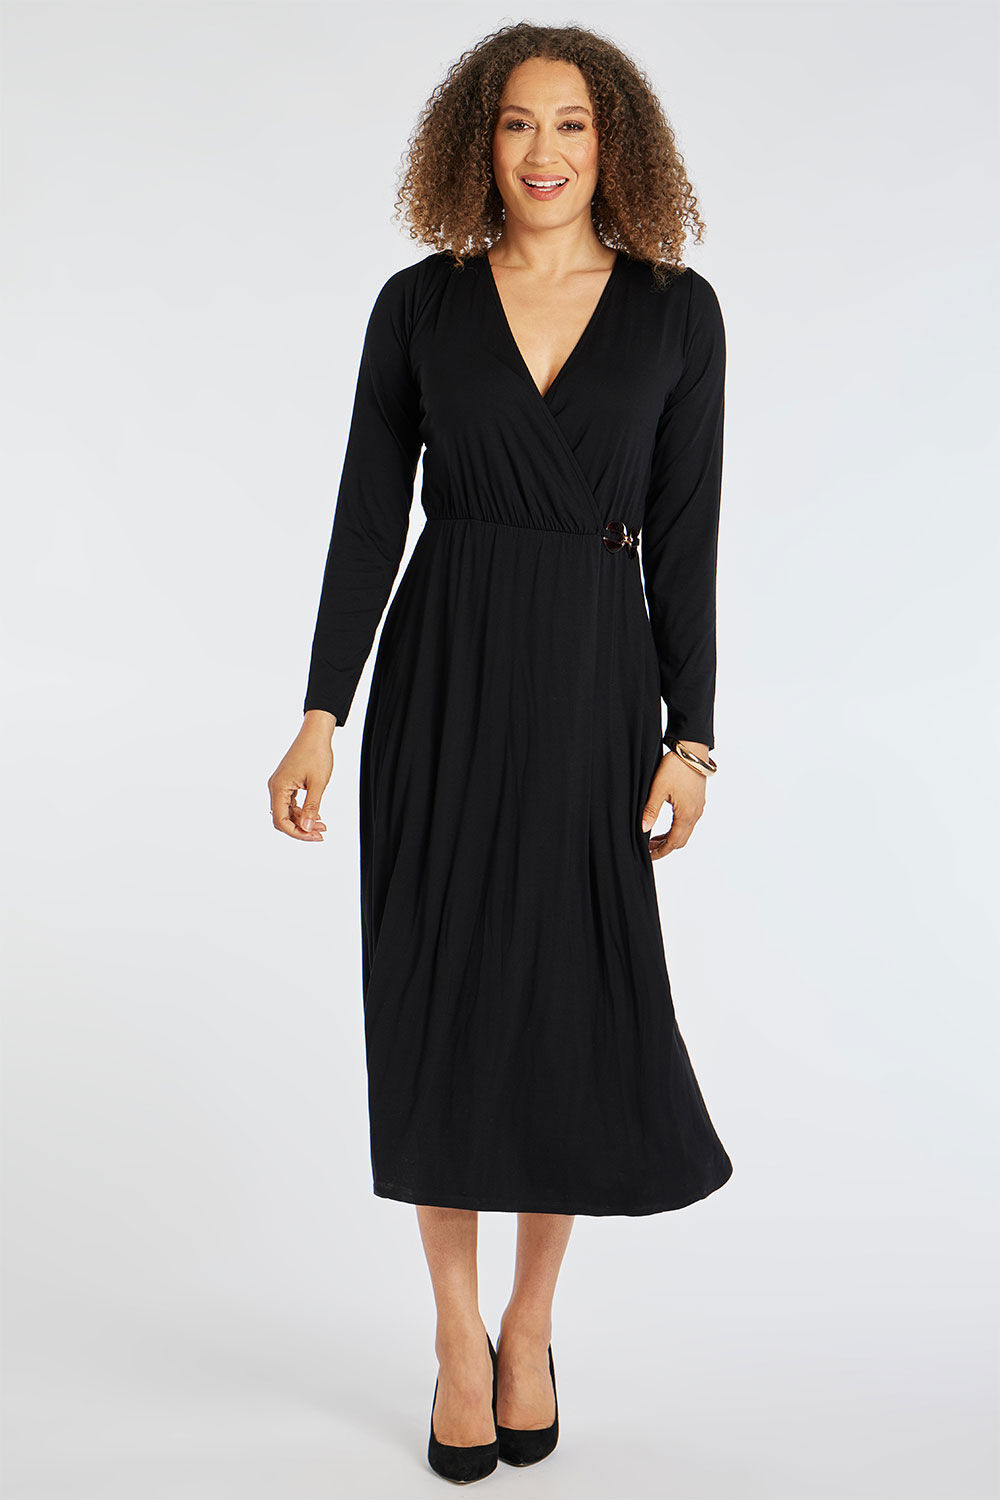 Bonmarche Women’s Black Plain Wrap Front Dress with Tortoise Shell Belt Detail, Size: 10